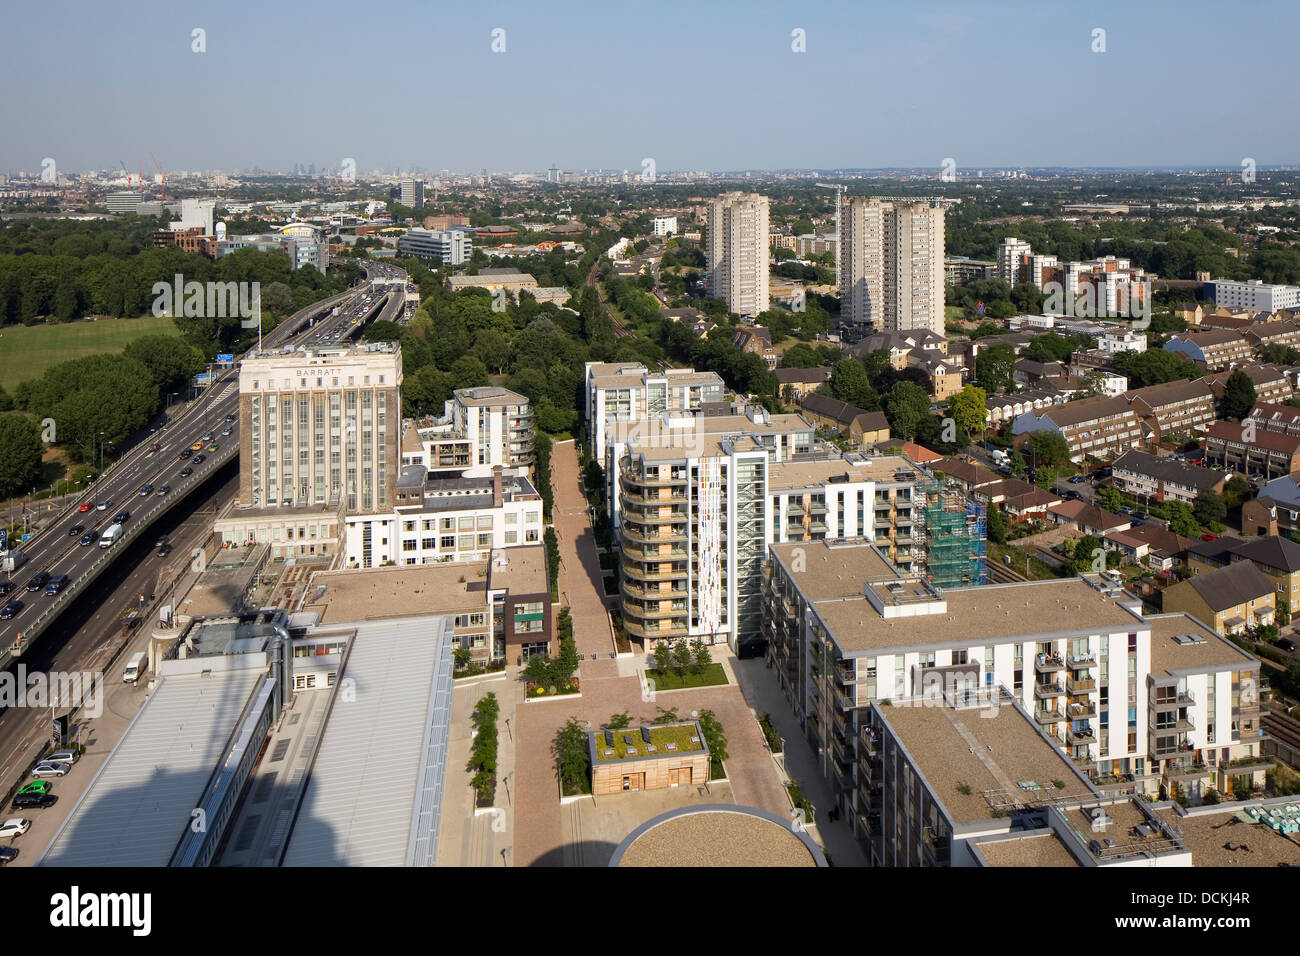 Great West Quarter with Alison Turnbull Artwork, Brentford, United Kingdom. Architect: Assael Architecture Ltd, 2013. Aerial Vie Stock Photo